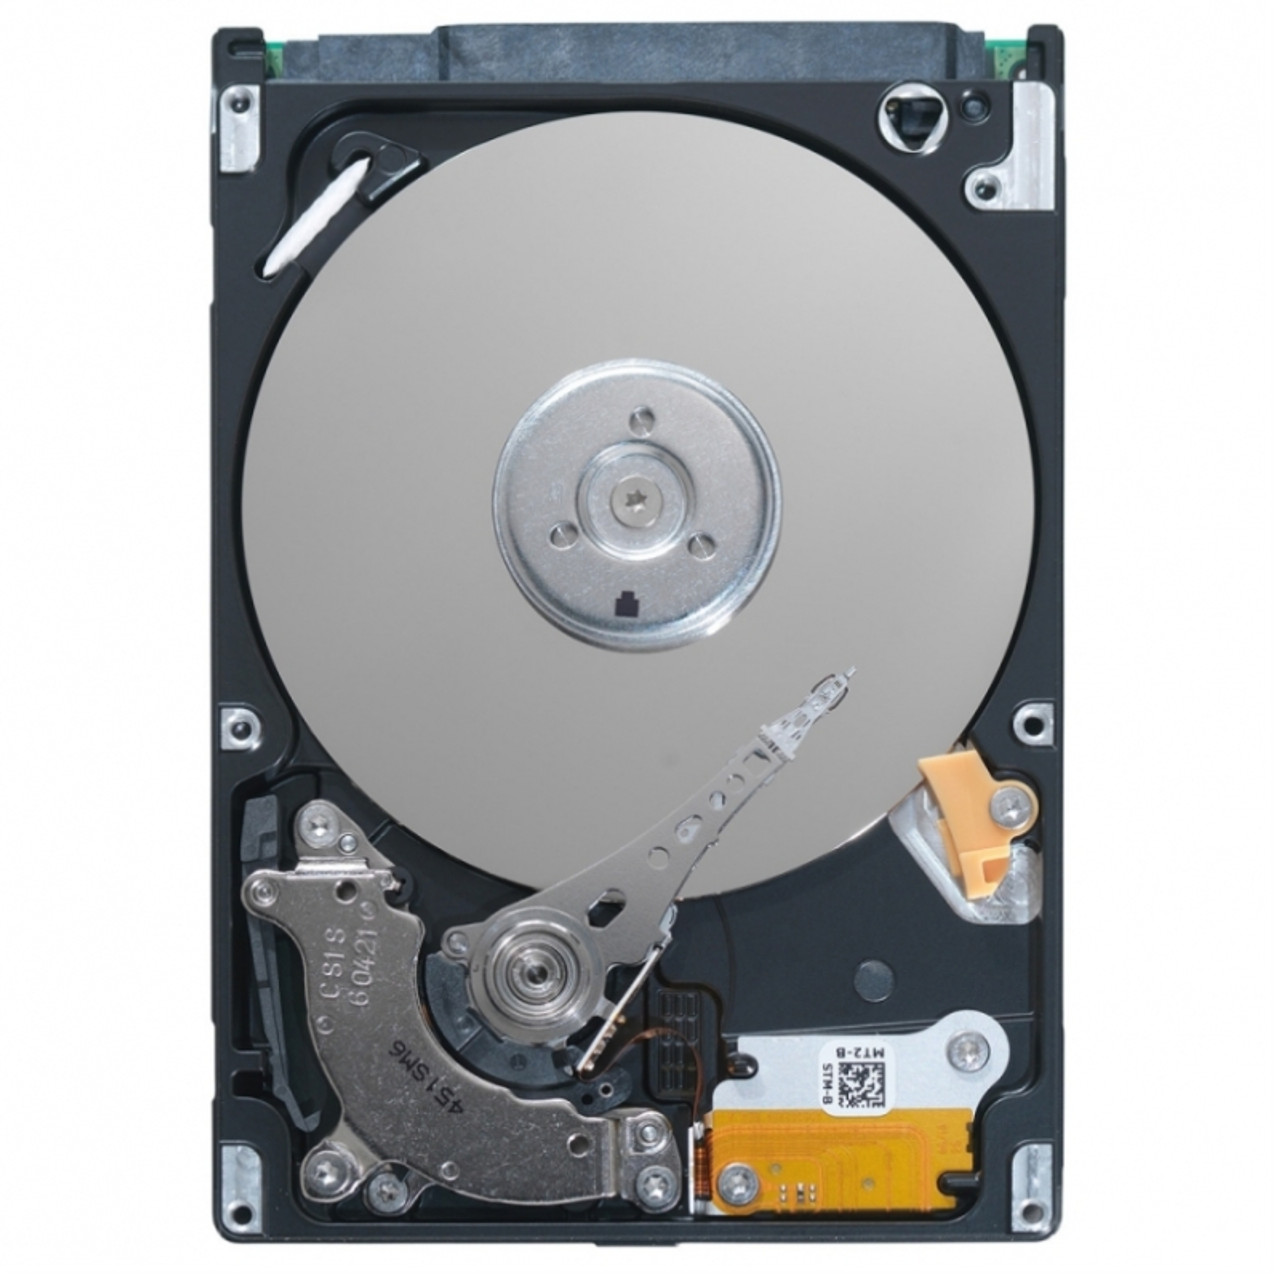 9HV144-037 - Seagate Momentus 7200.4 500GB 7200RPM SATA 3GB/s 16MB Cache 2.5-inch Internal Hard Disk Drive